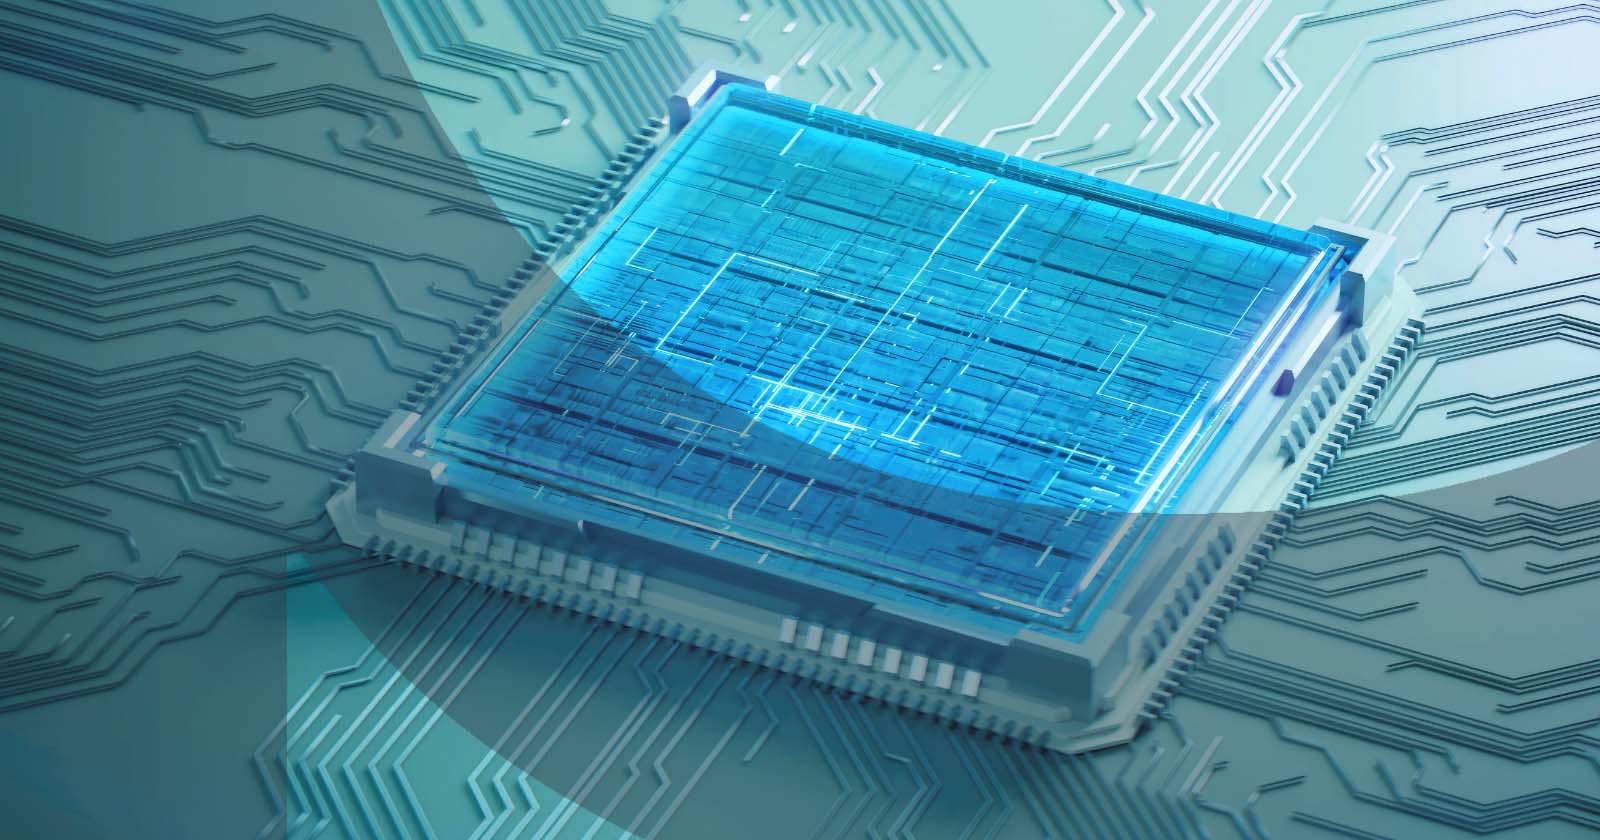 3D illustration of blue glowing futuristic microchip on circuit board